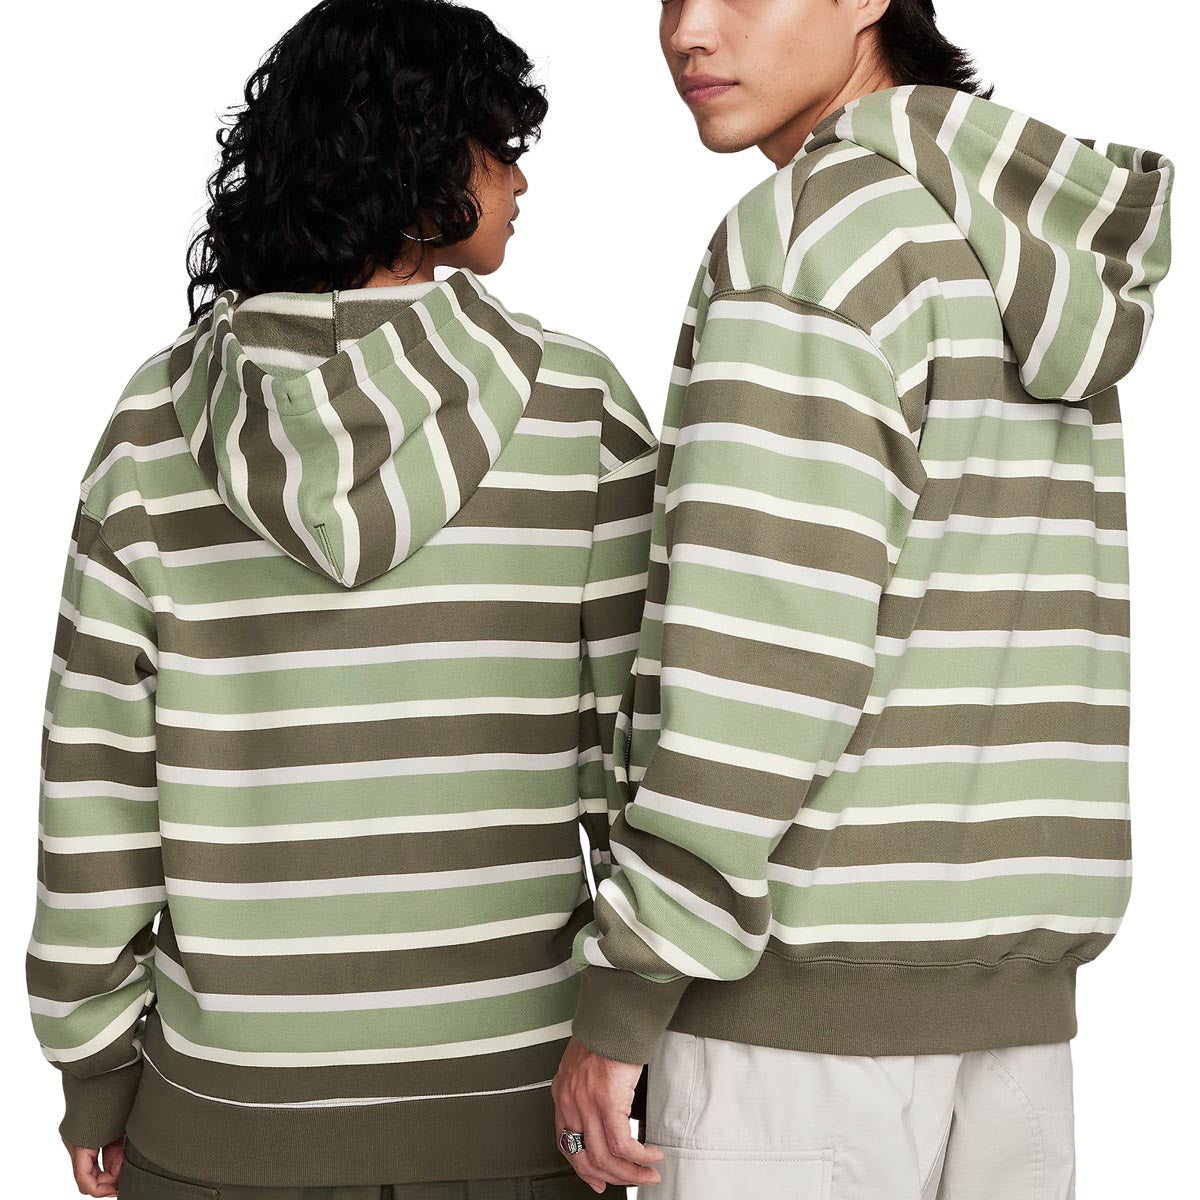 Nike SB Striped Zip Up Hoodie - Coconut Milk/Oil Green/White image 3